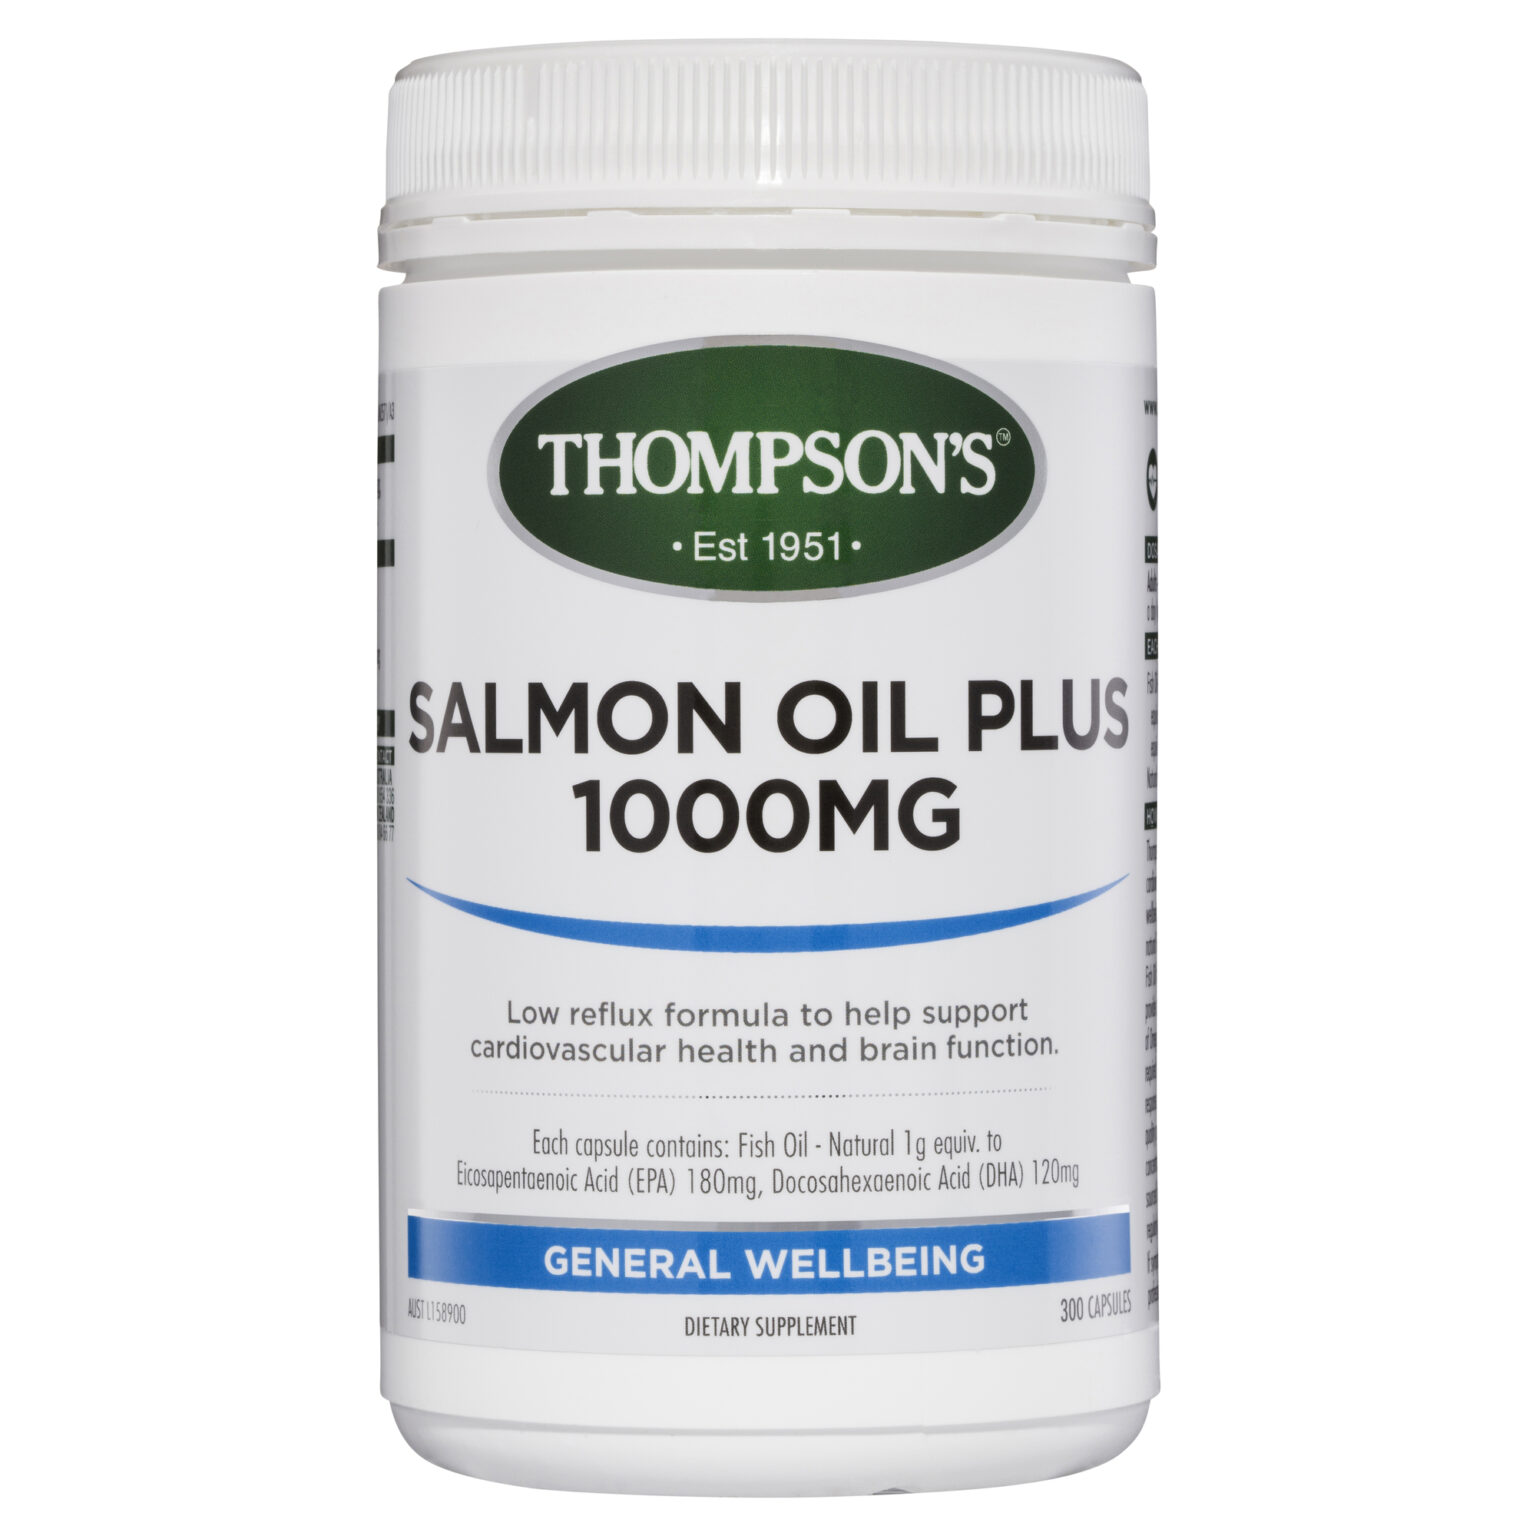 Thompsons-Salmon-Oil-Plus-1000mg-300-Capsules-7-1536x1536